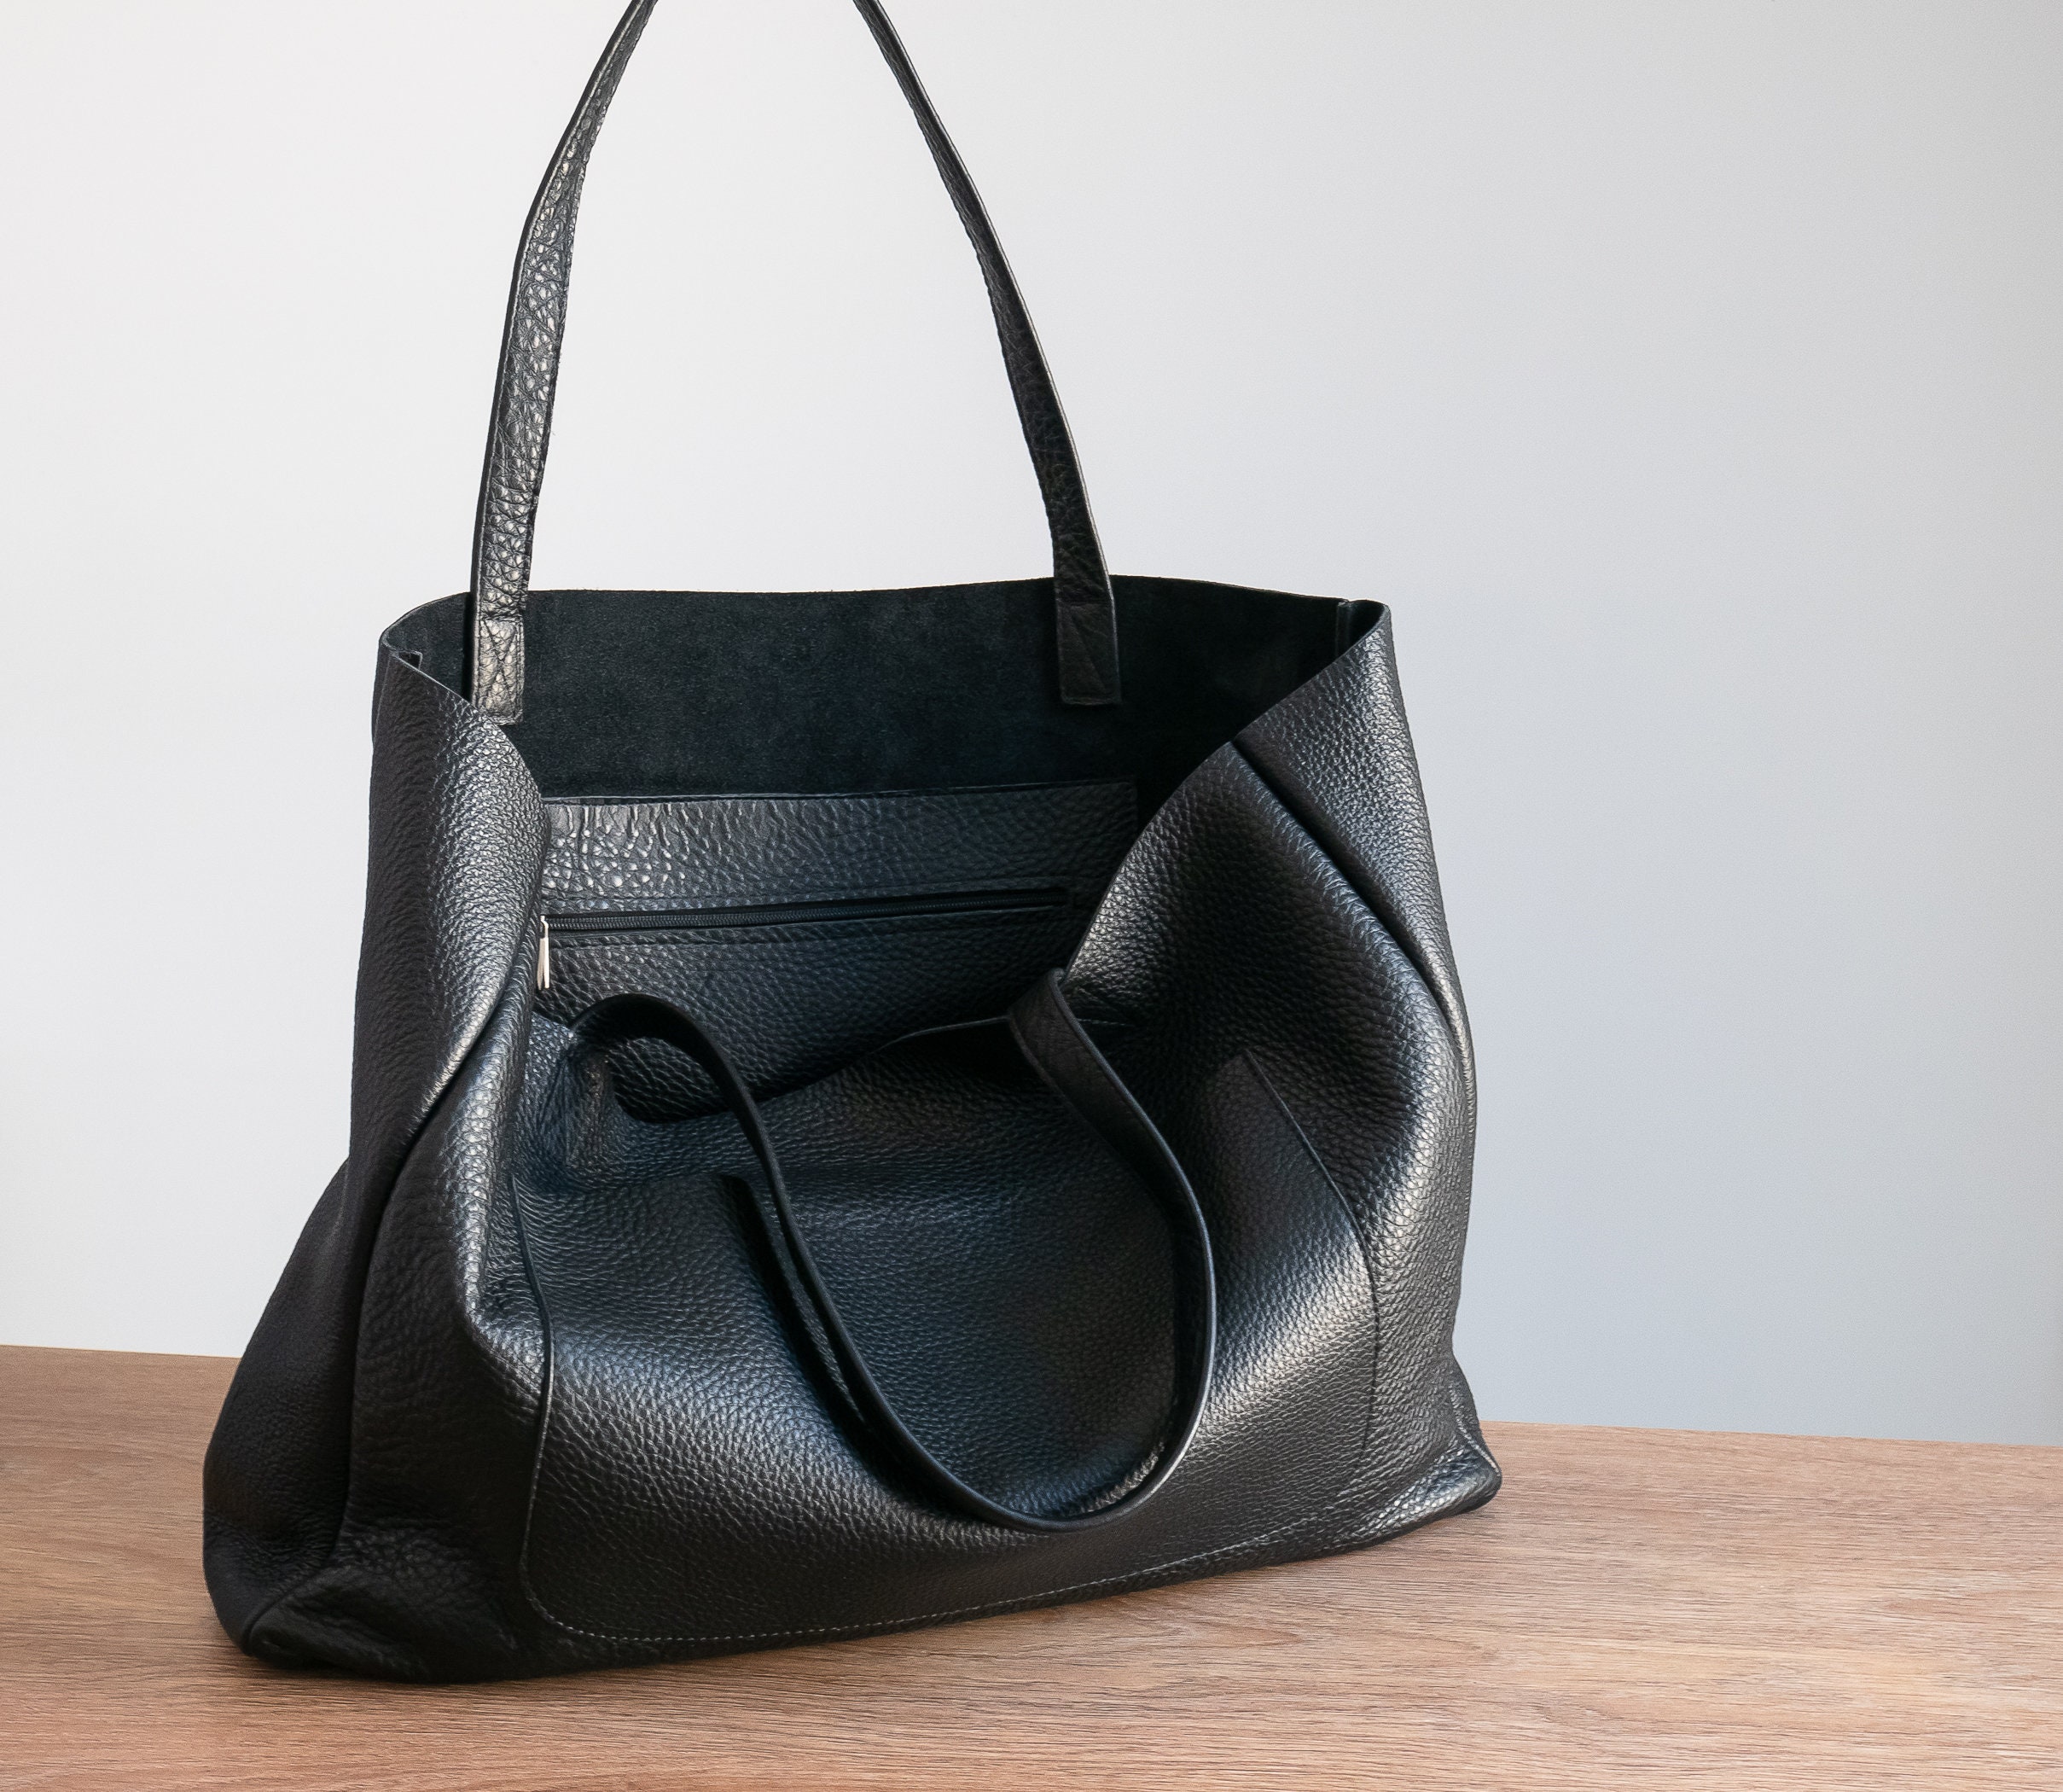  HOXIS Oversize Vegan Leather Tote Women Weekender Bag Shopper  Handbag Travel Purse (Black) : Clothing, Shoes & Jewelry